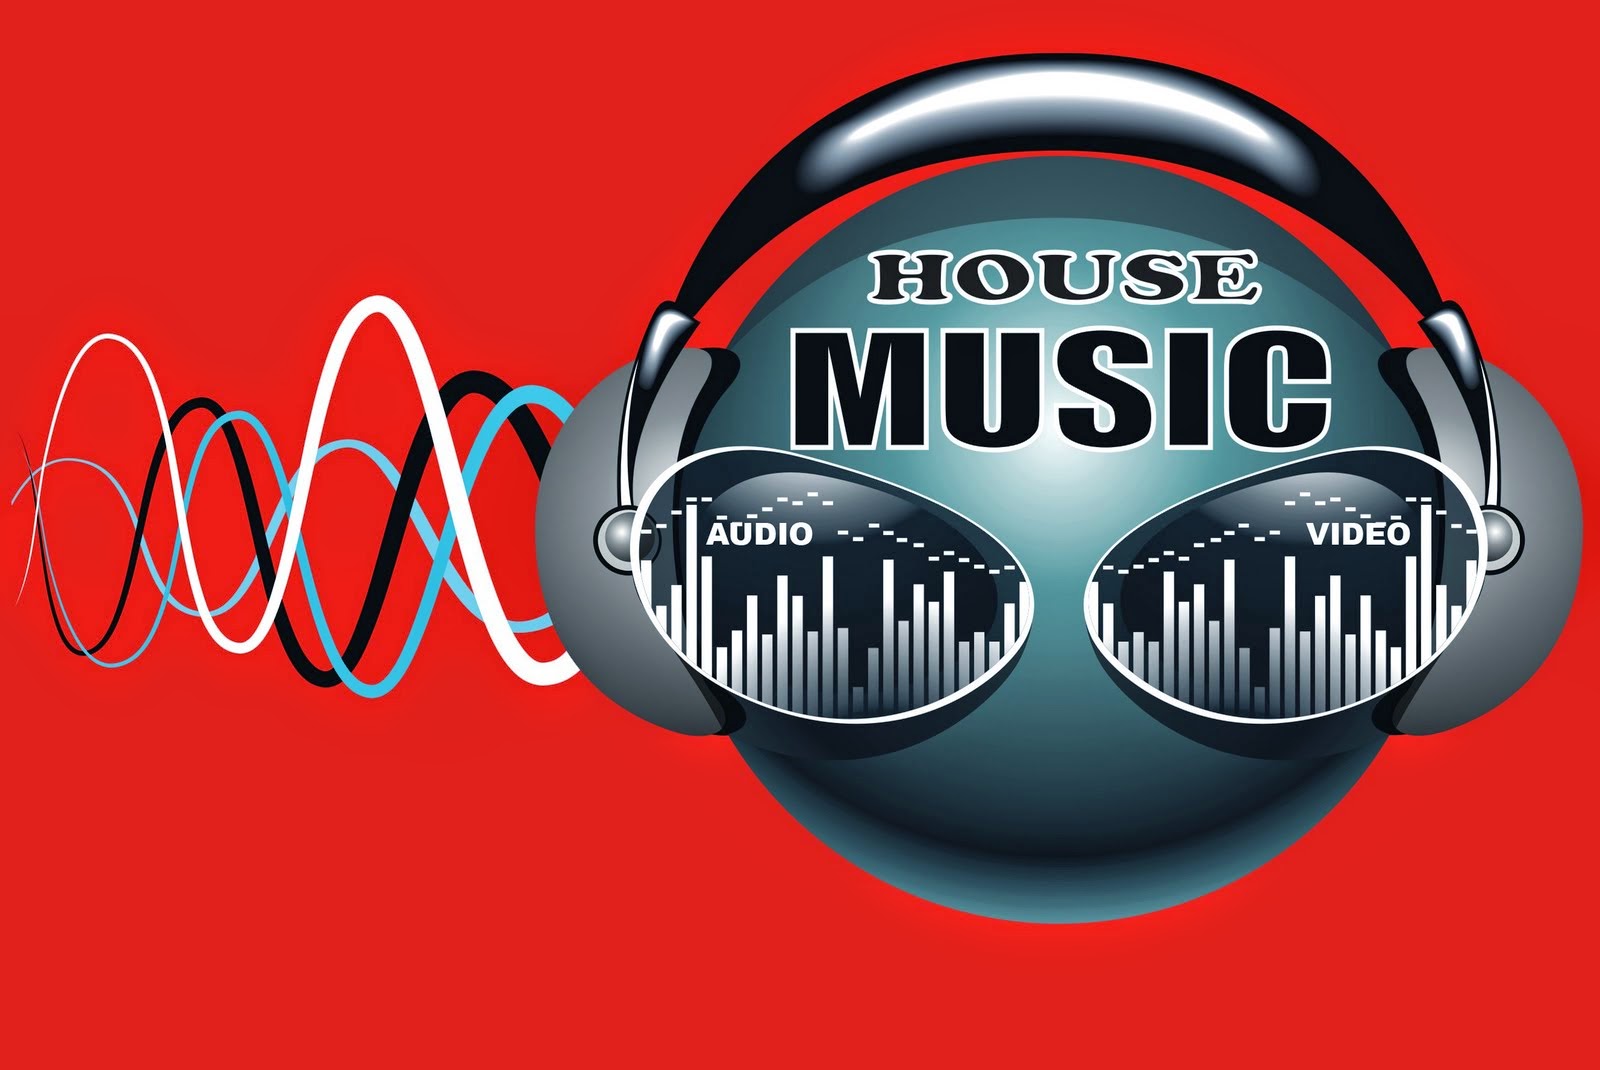 House music hits. House Music картинки. Картинки Хаус Мьюзик. Хаус музыка фото. House Жанр музыки.